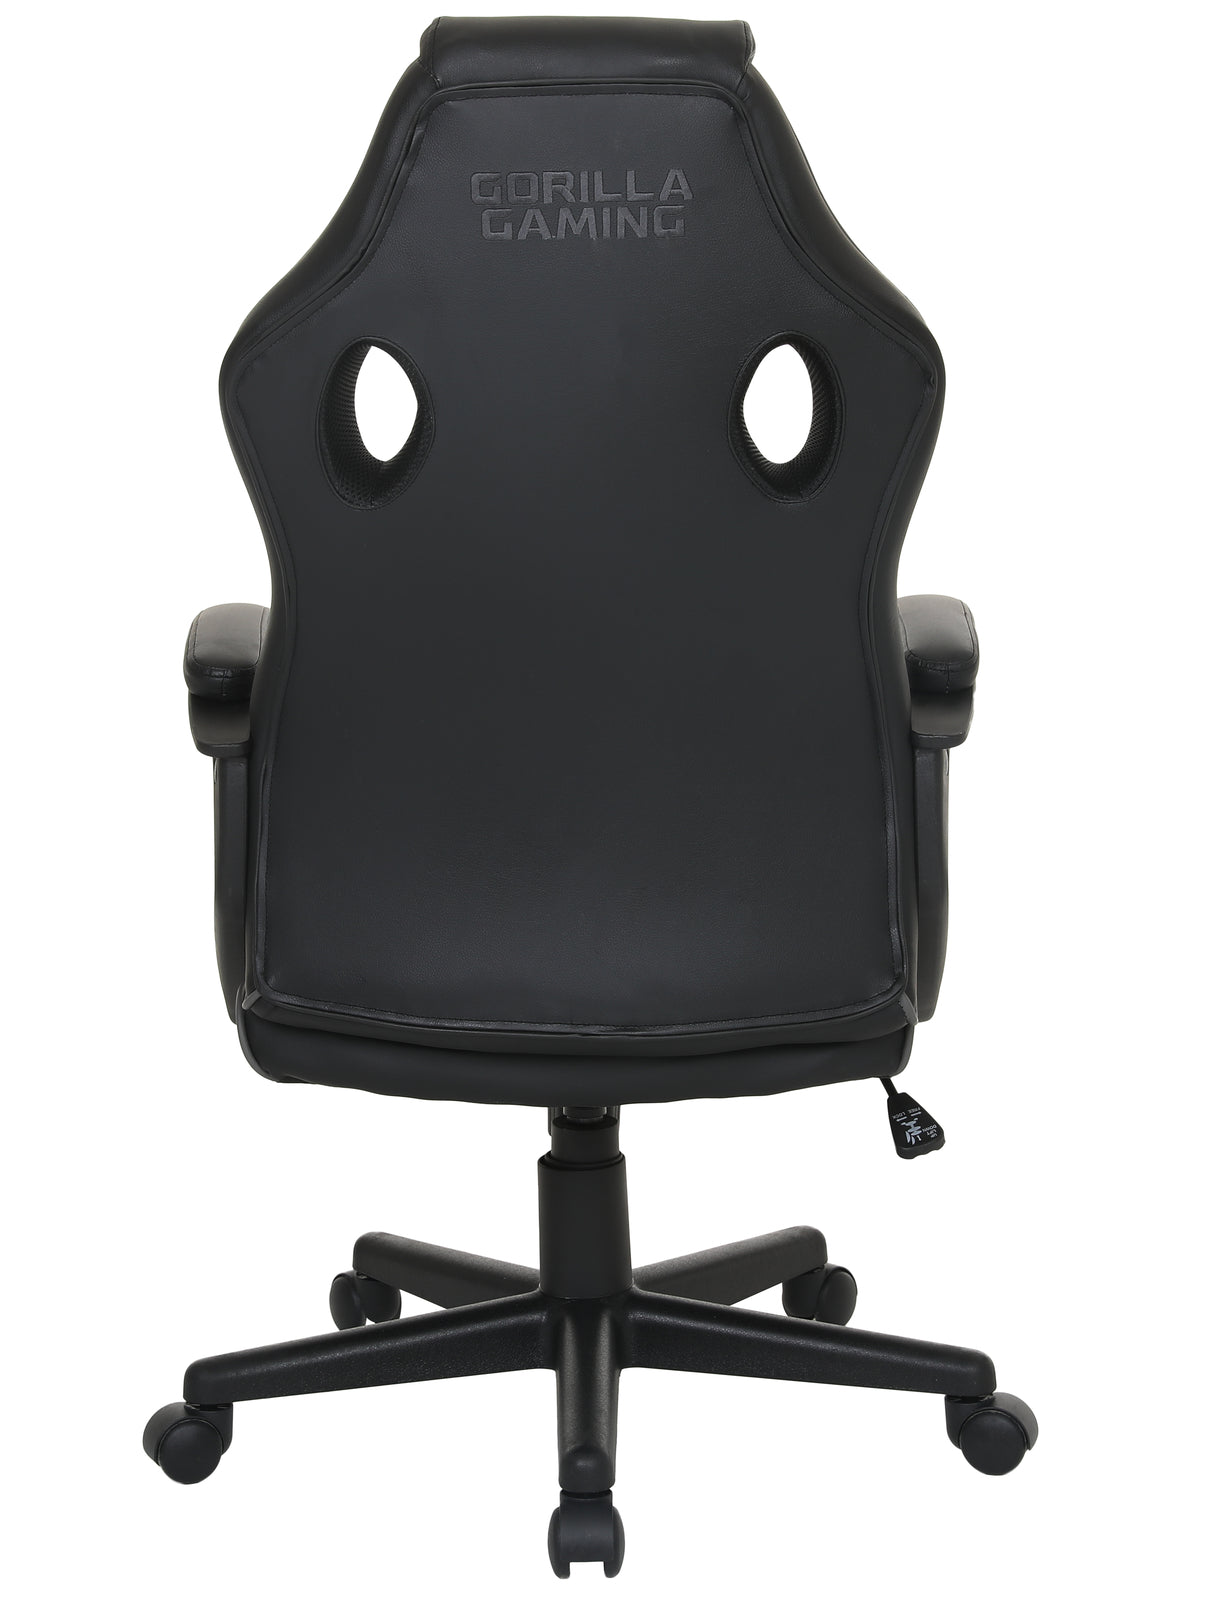 Gorilla Gaming Chair - Black/Grey - Xbox Series X